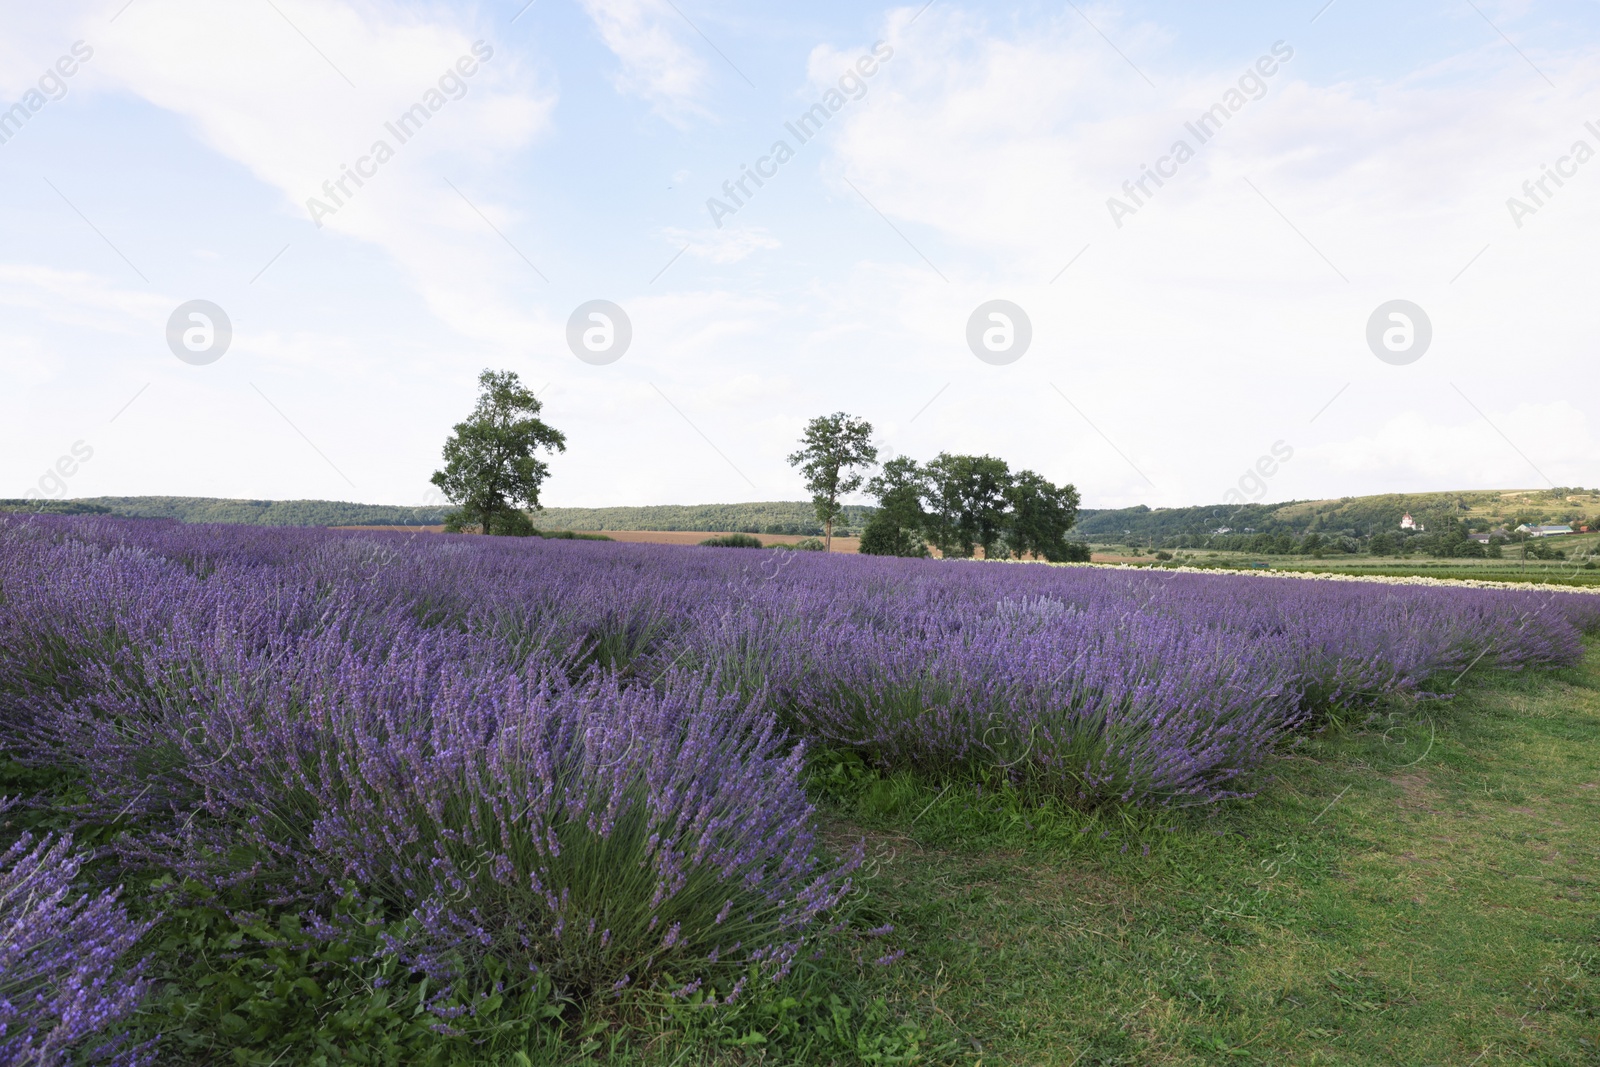 Photo of Blooming lavender growing in field under beautiful sky